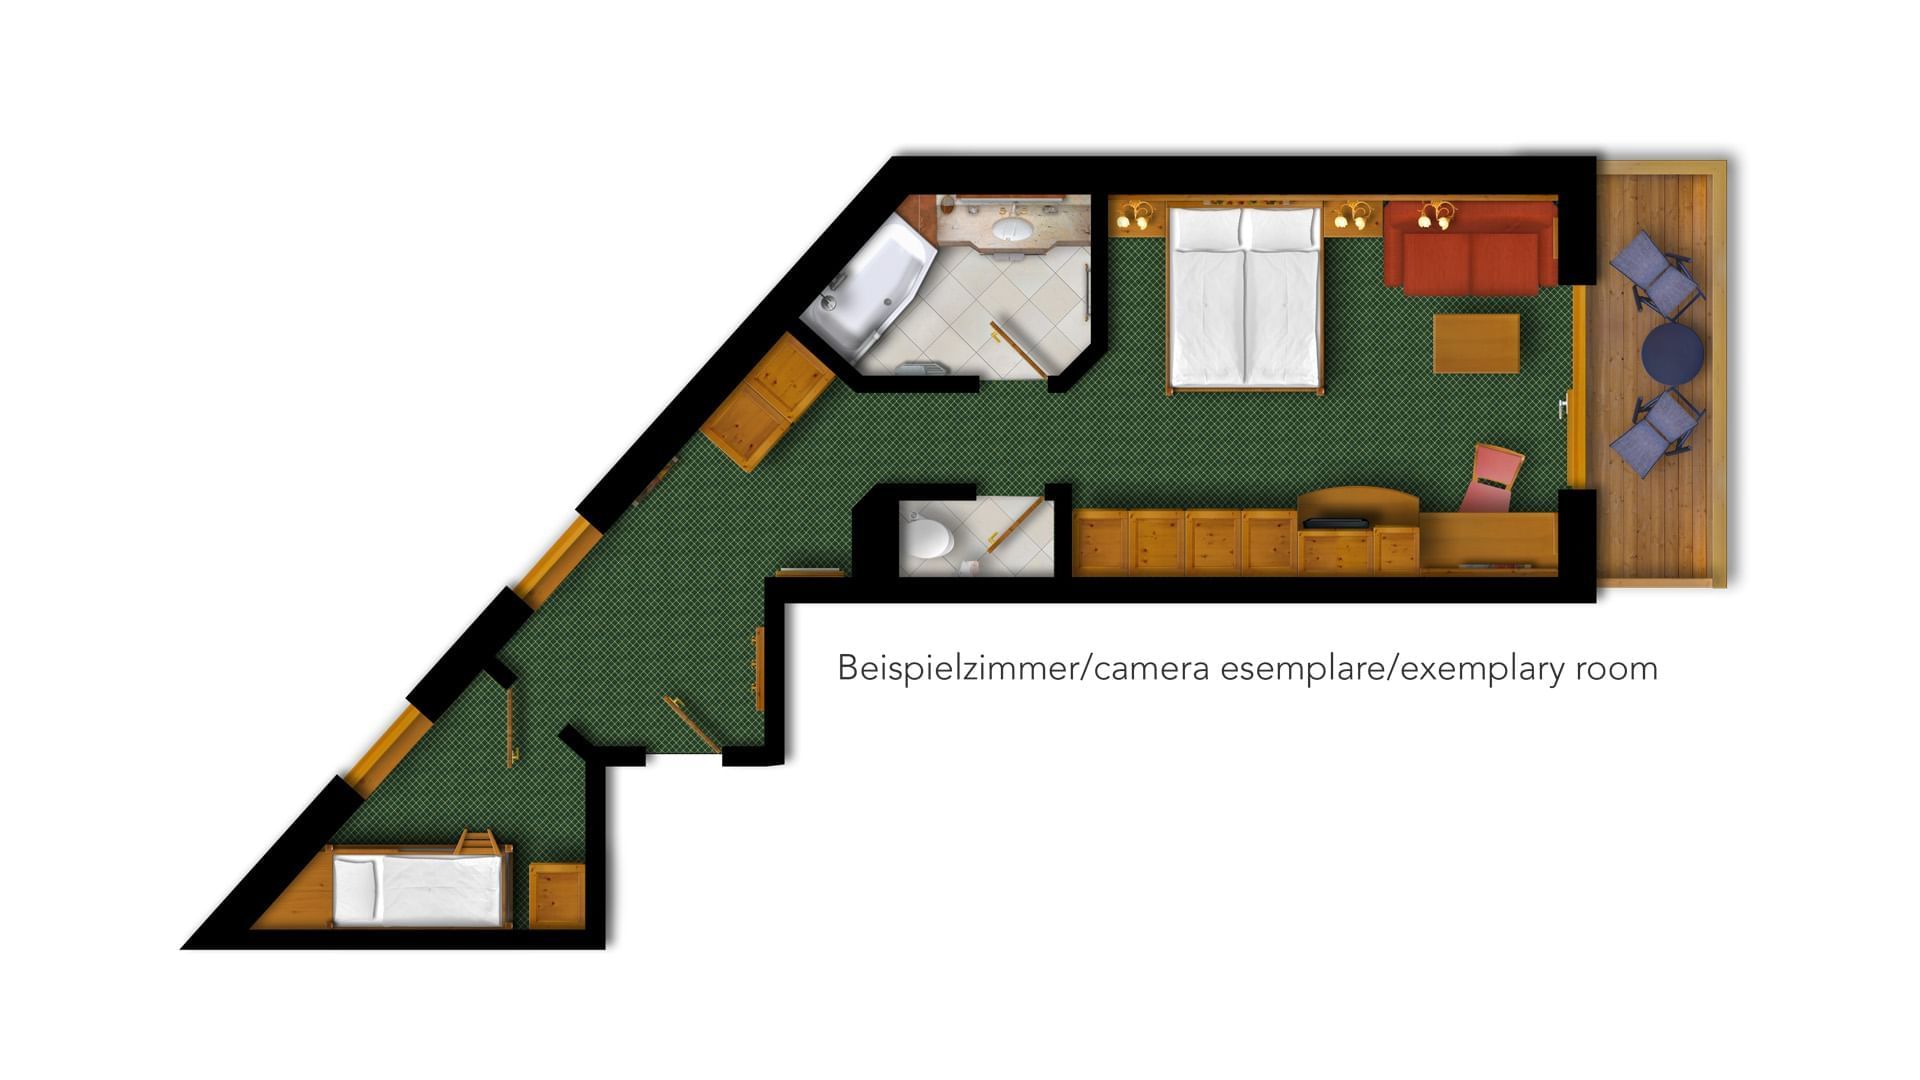 Family Suite Superior, Floor Plan at Falkensteiner Hotels